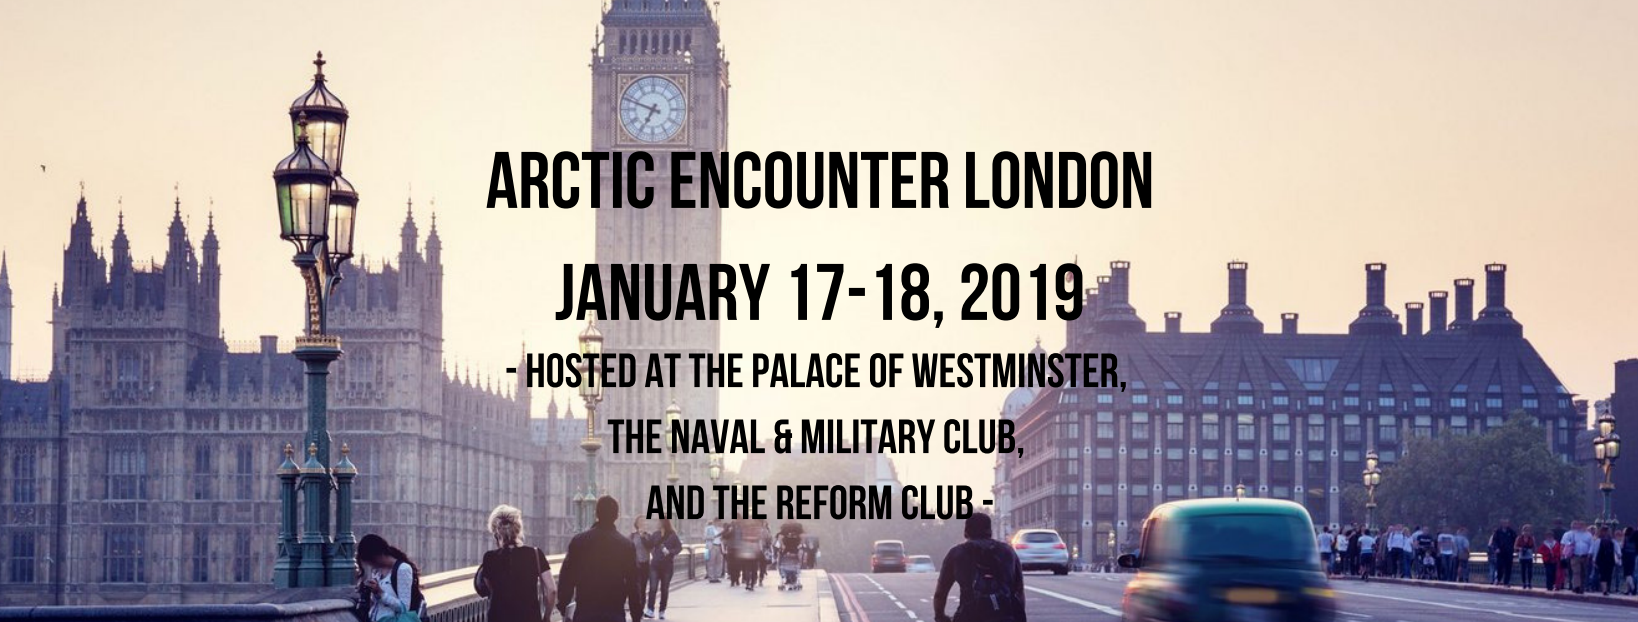 Arctic Encounter London 2019